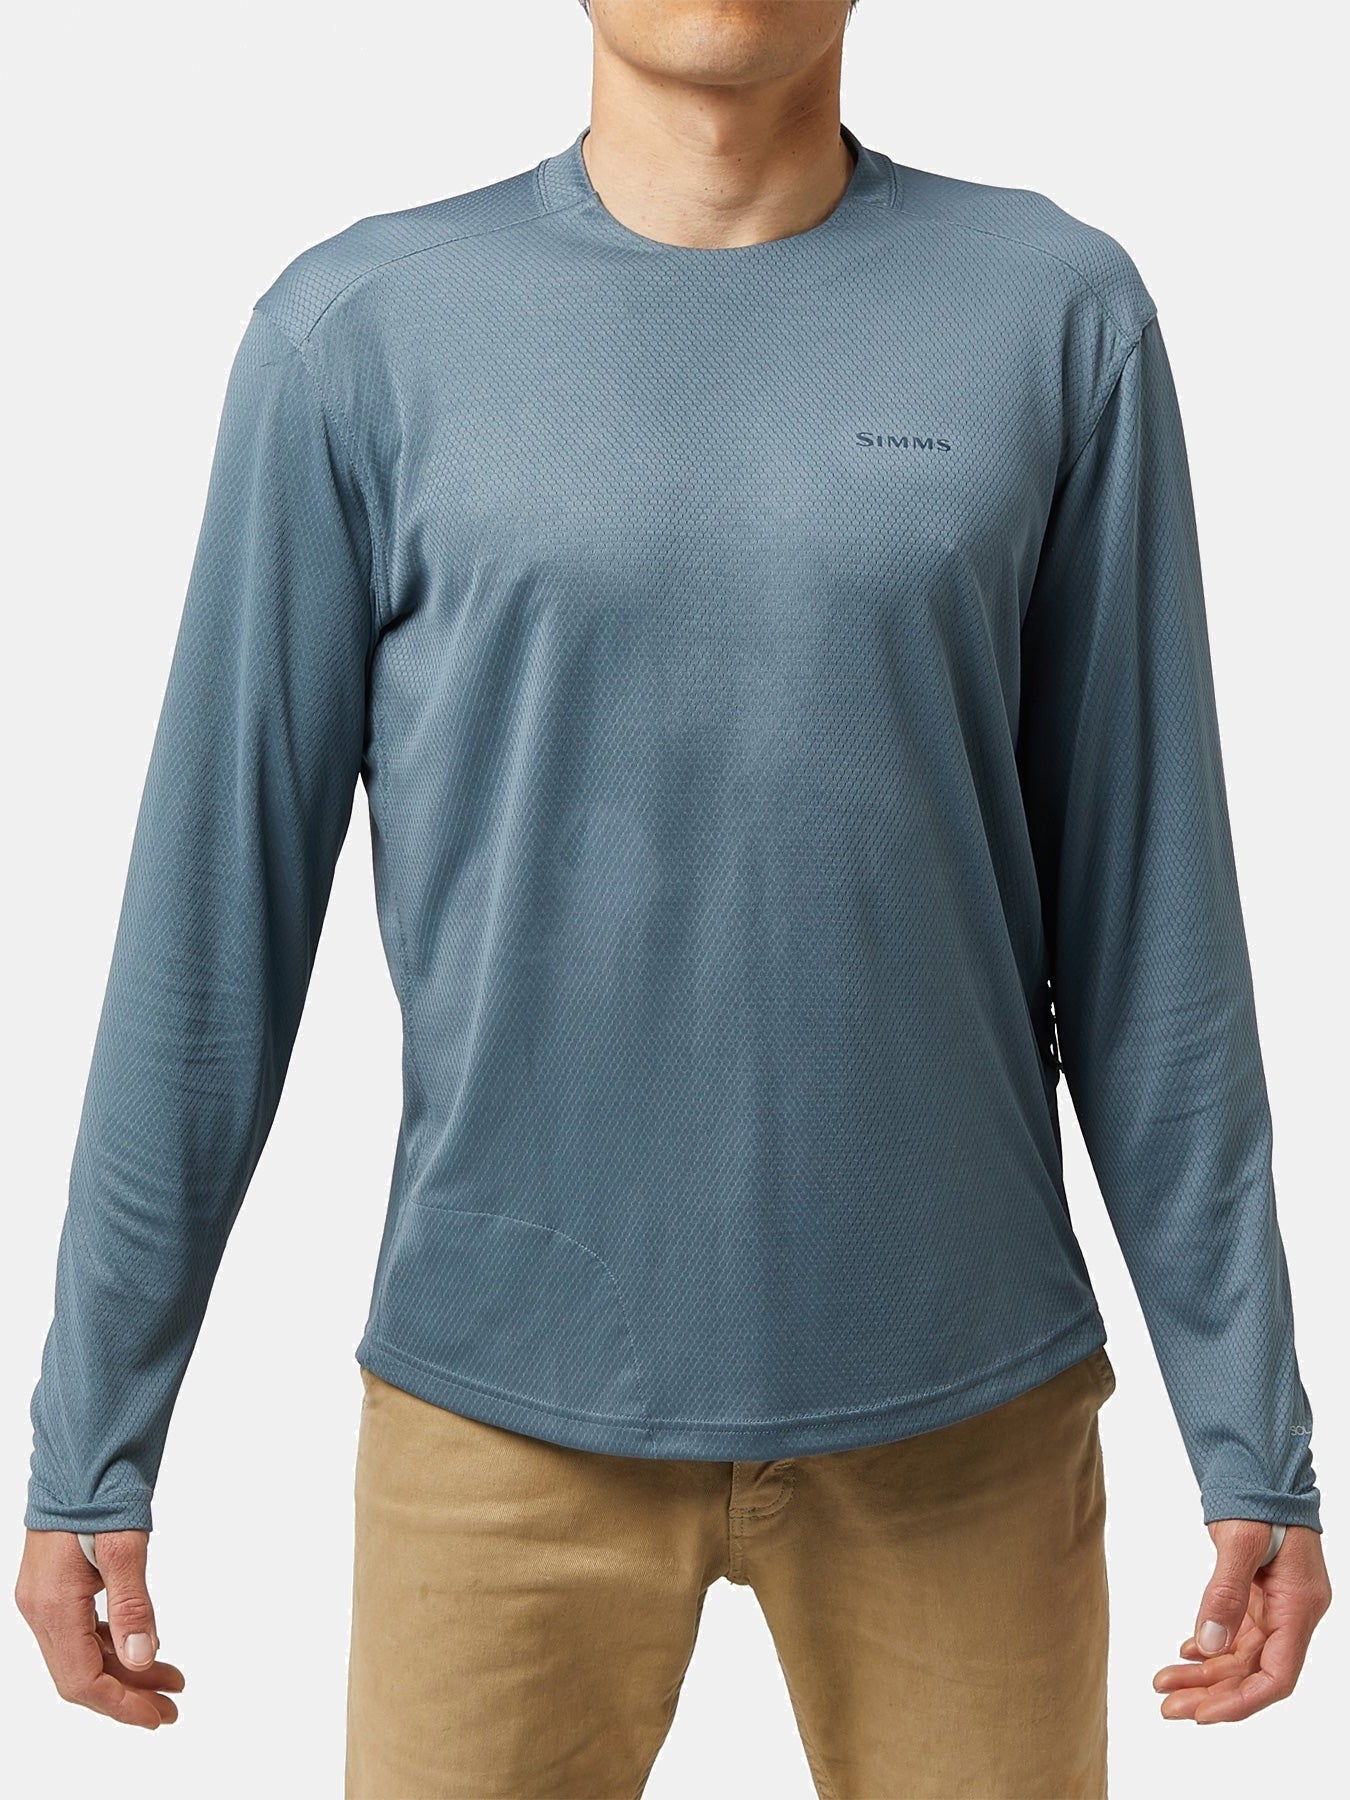 Simms SolarFlex Plus Crew Shirt UPF 50+ Long Sleeve  XL Pacific 